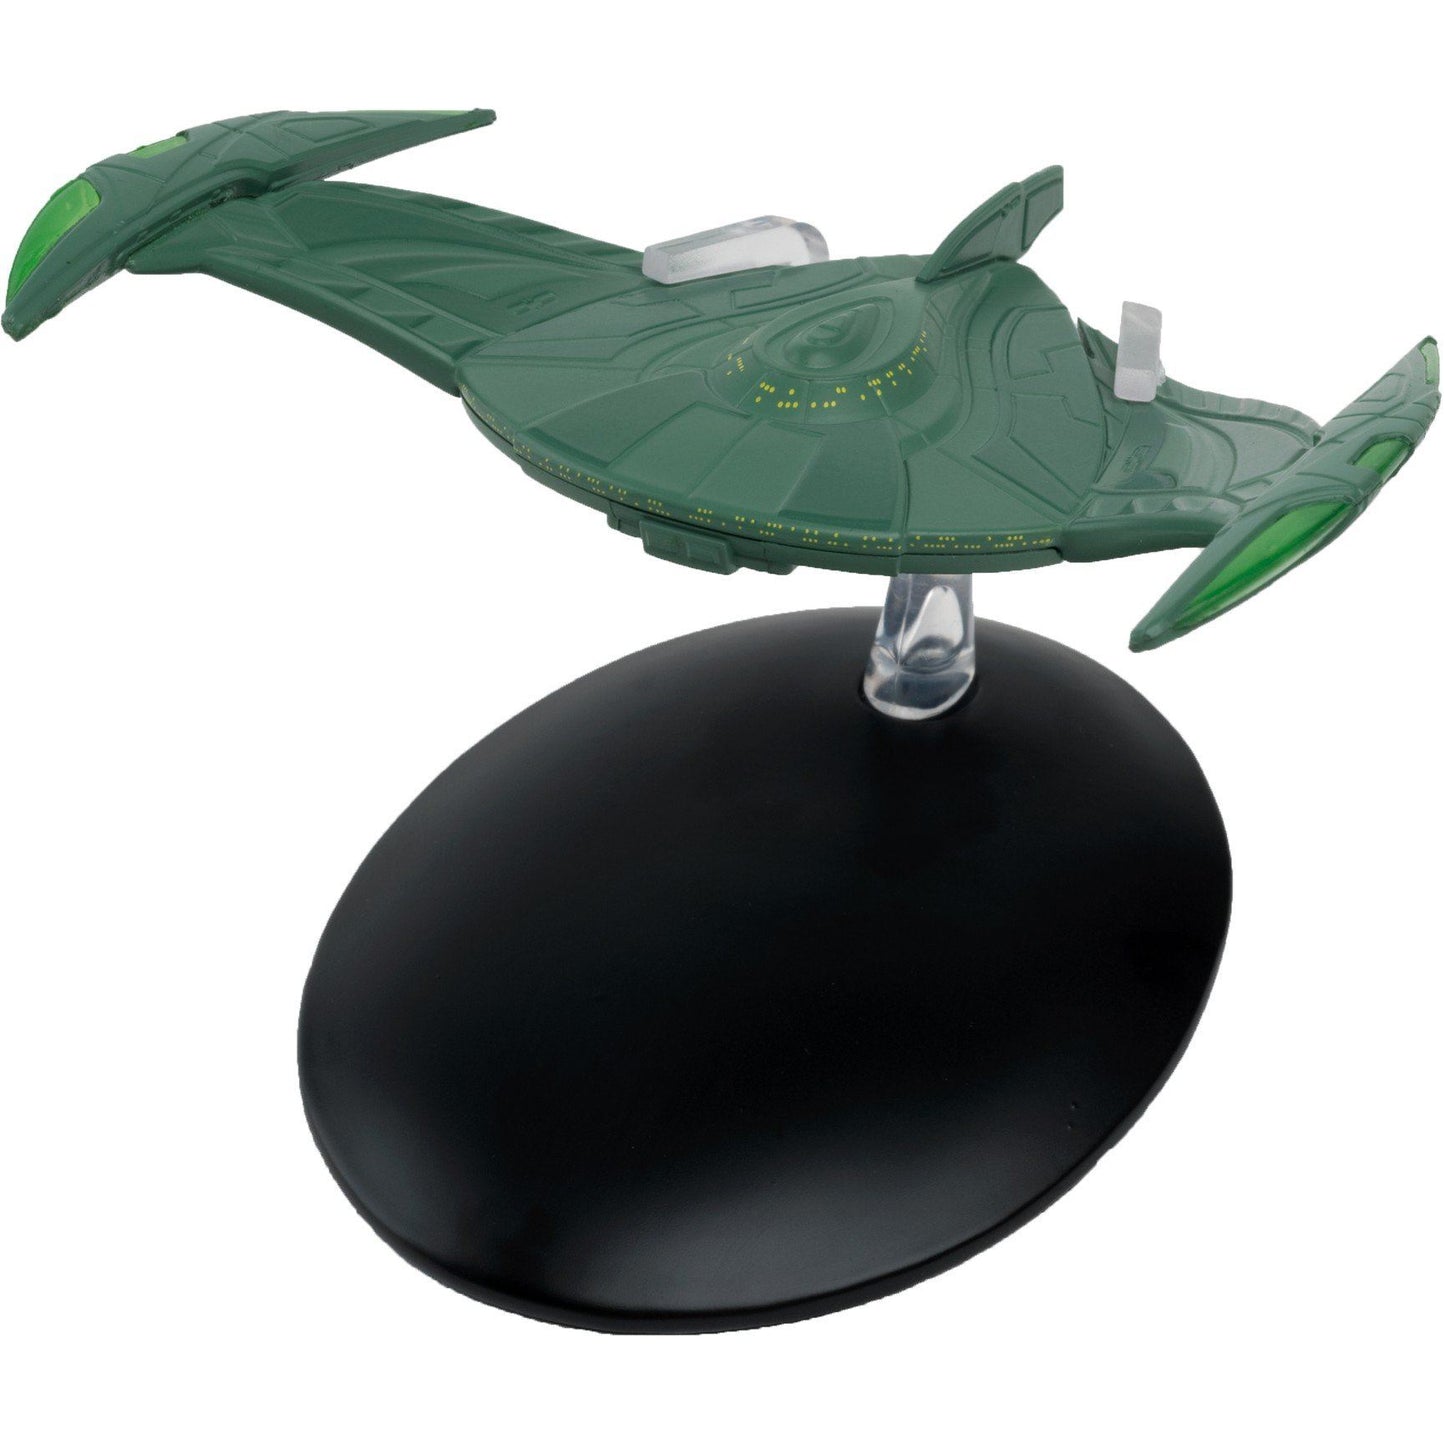 #27 Romulan Bird-Of-Prey (2152) Starship Model Die Cast Ship (Eaglemoss / Star Trek)